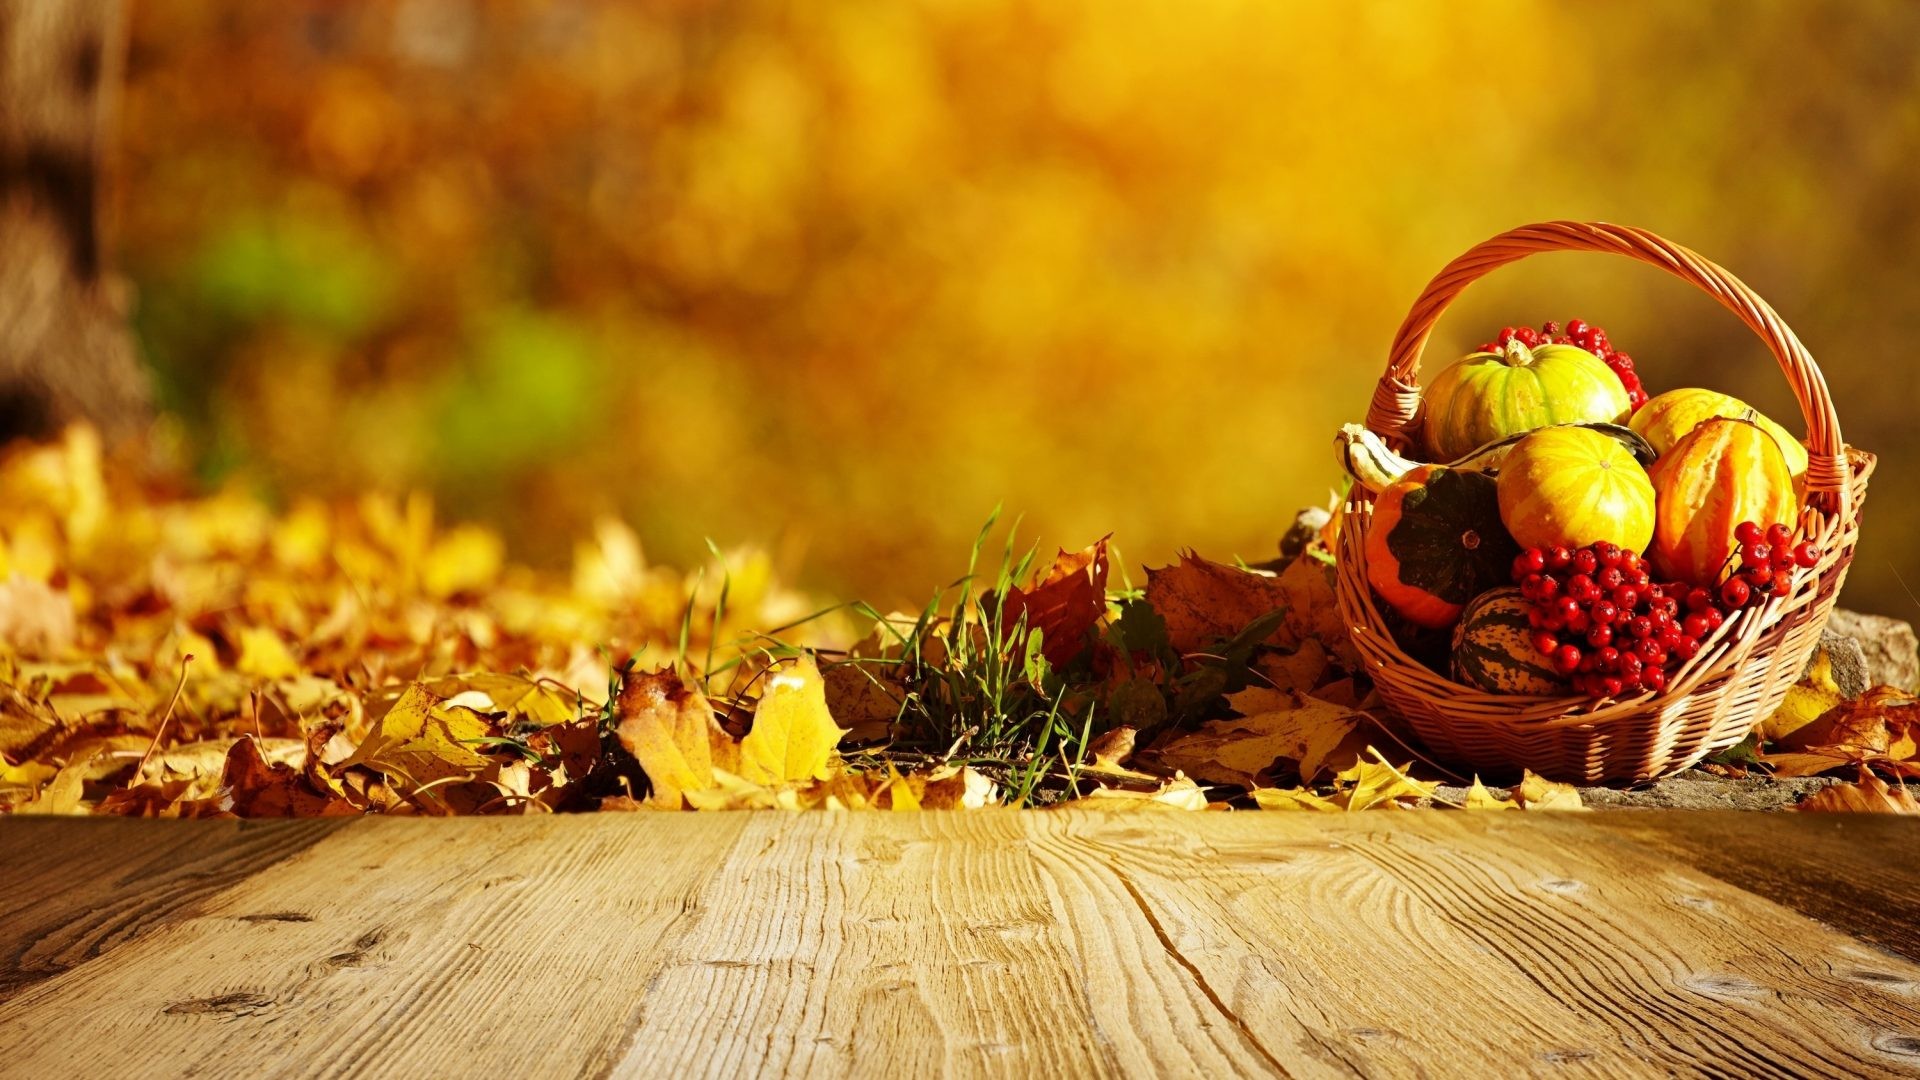 1920x1080 Harvest Tag - Fall Harvest Autumn Leaves Desktop Backgrounds for HD 16:9  High Definition